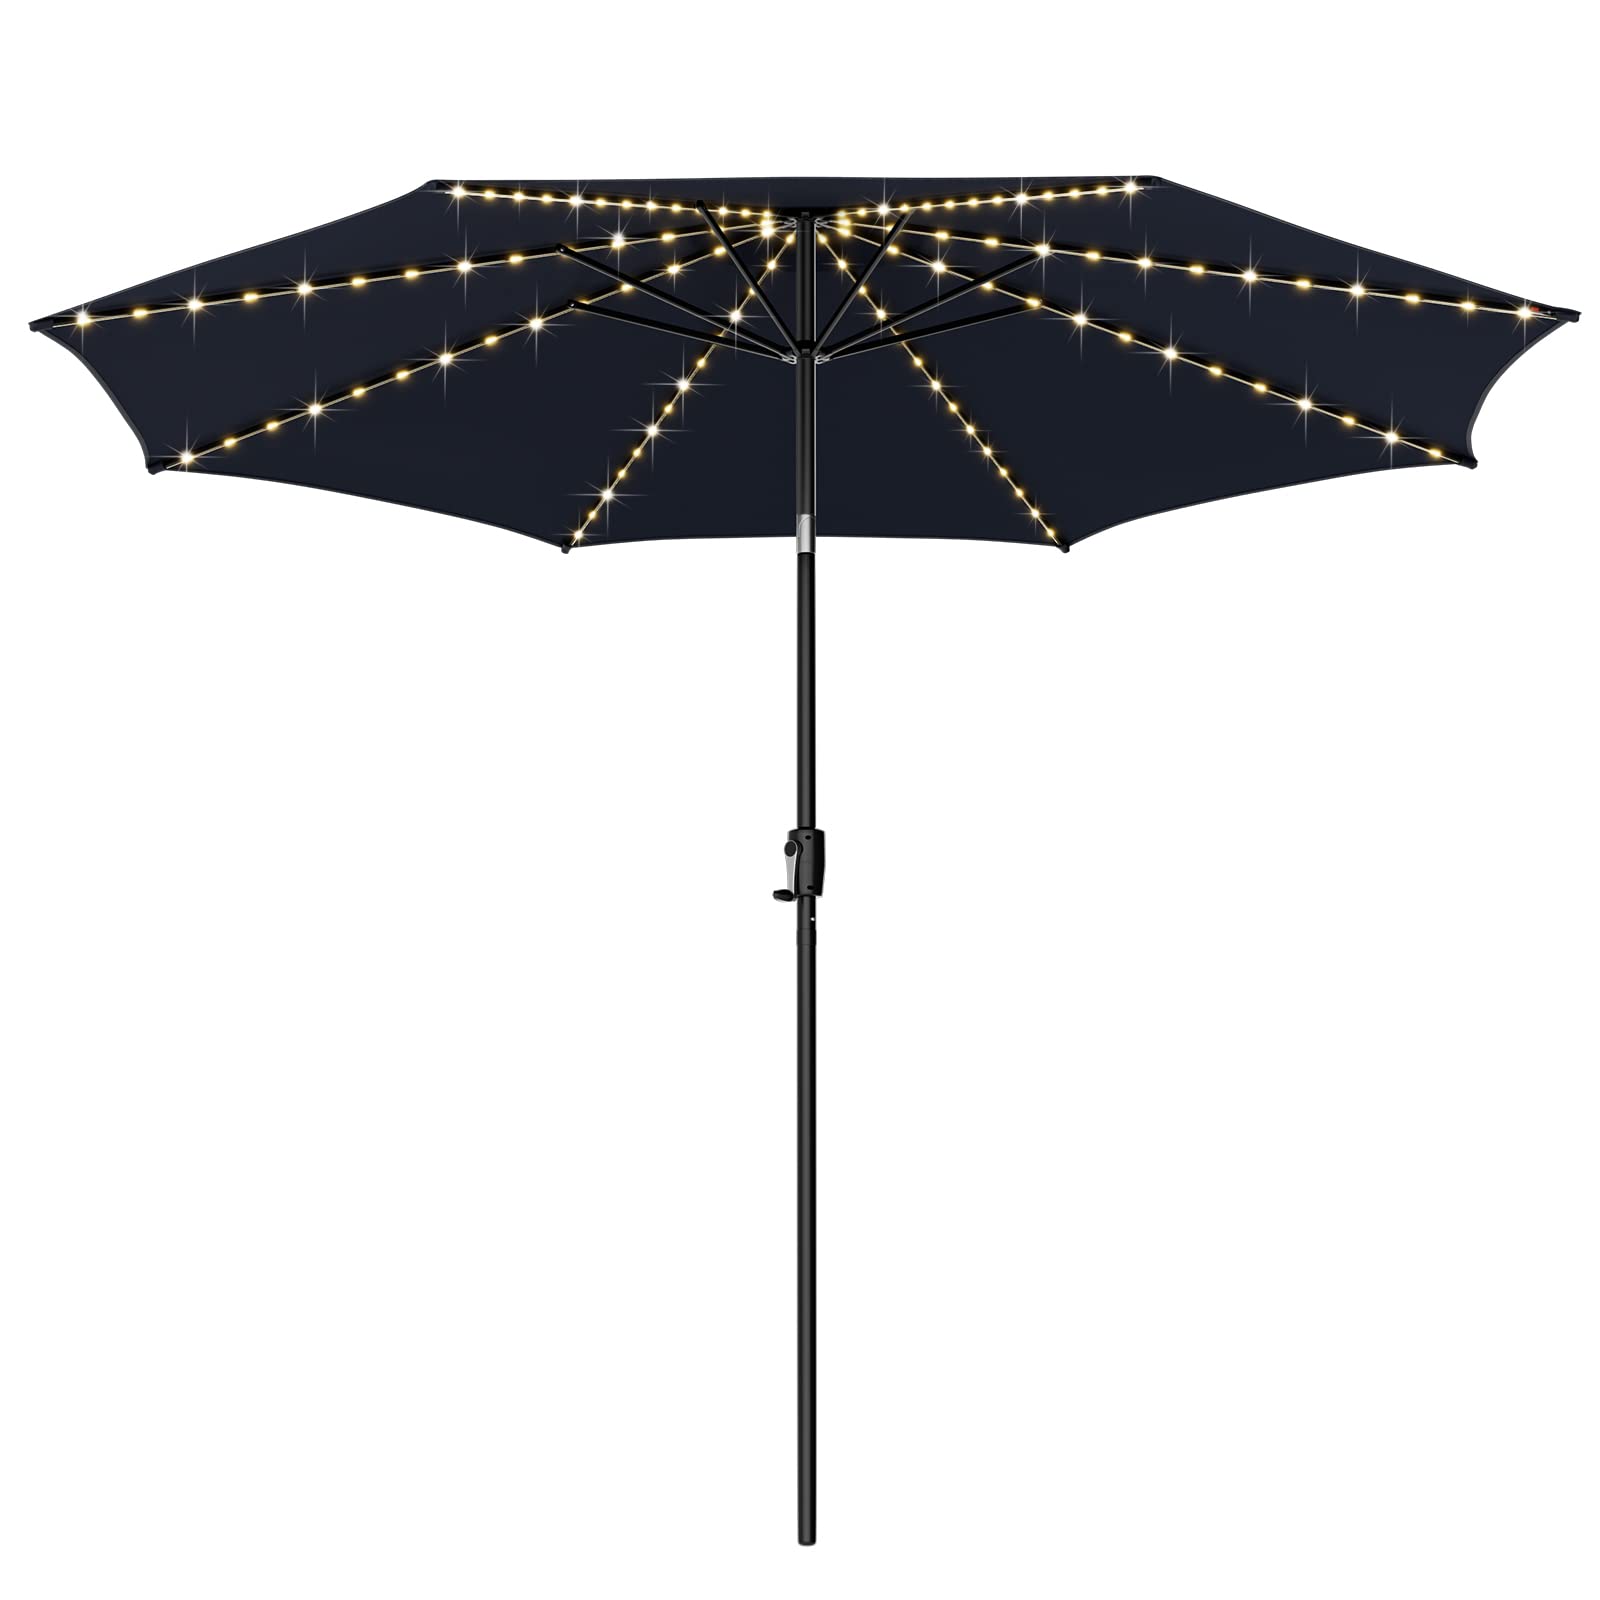 Giantex 10 ft Patio Umbrella with 112 Solar Lights, Outdoor Table Market Umbrellas with 8 Ribs